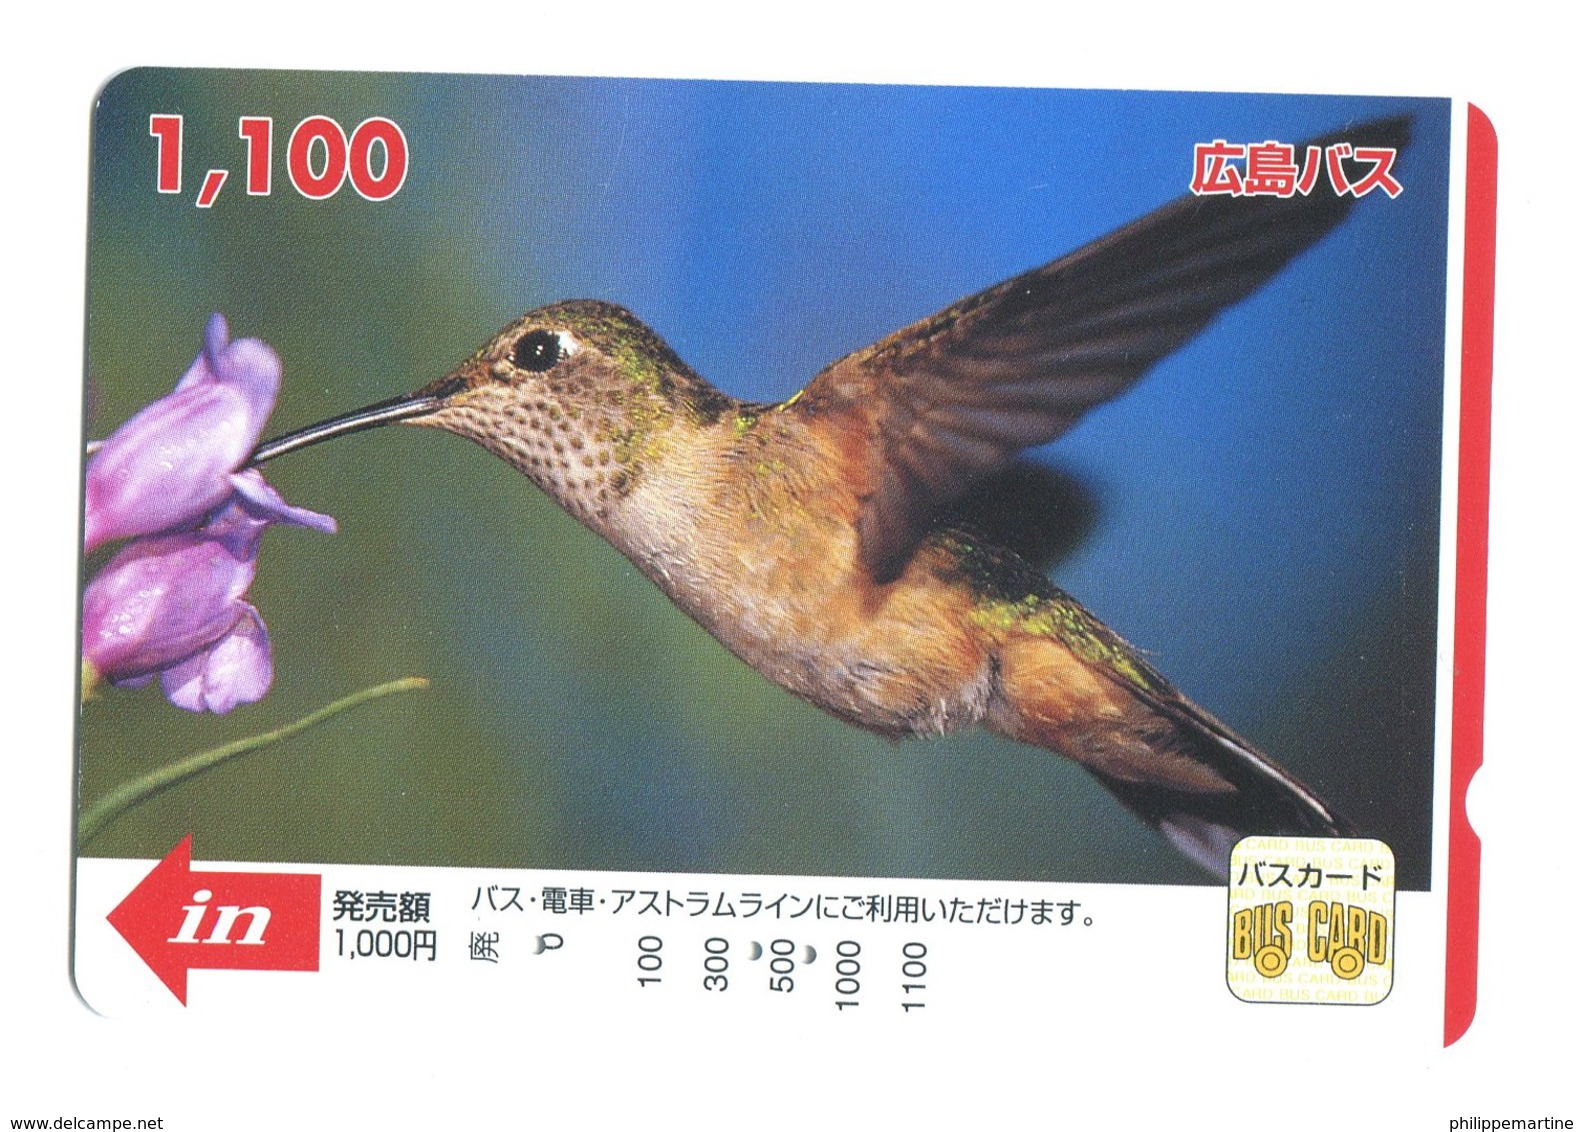 Japon - Bus Card : Colibri - Wereld